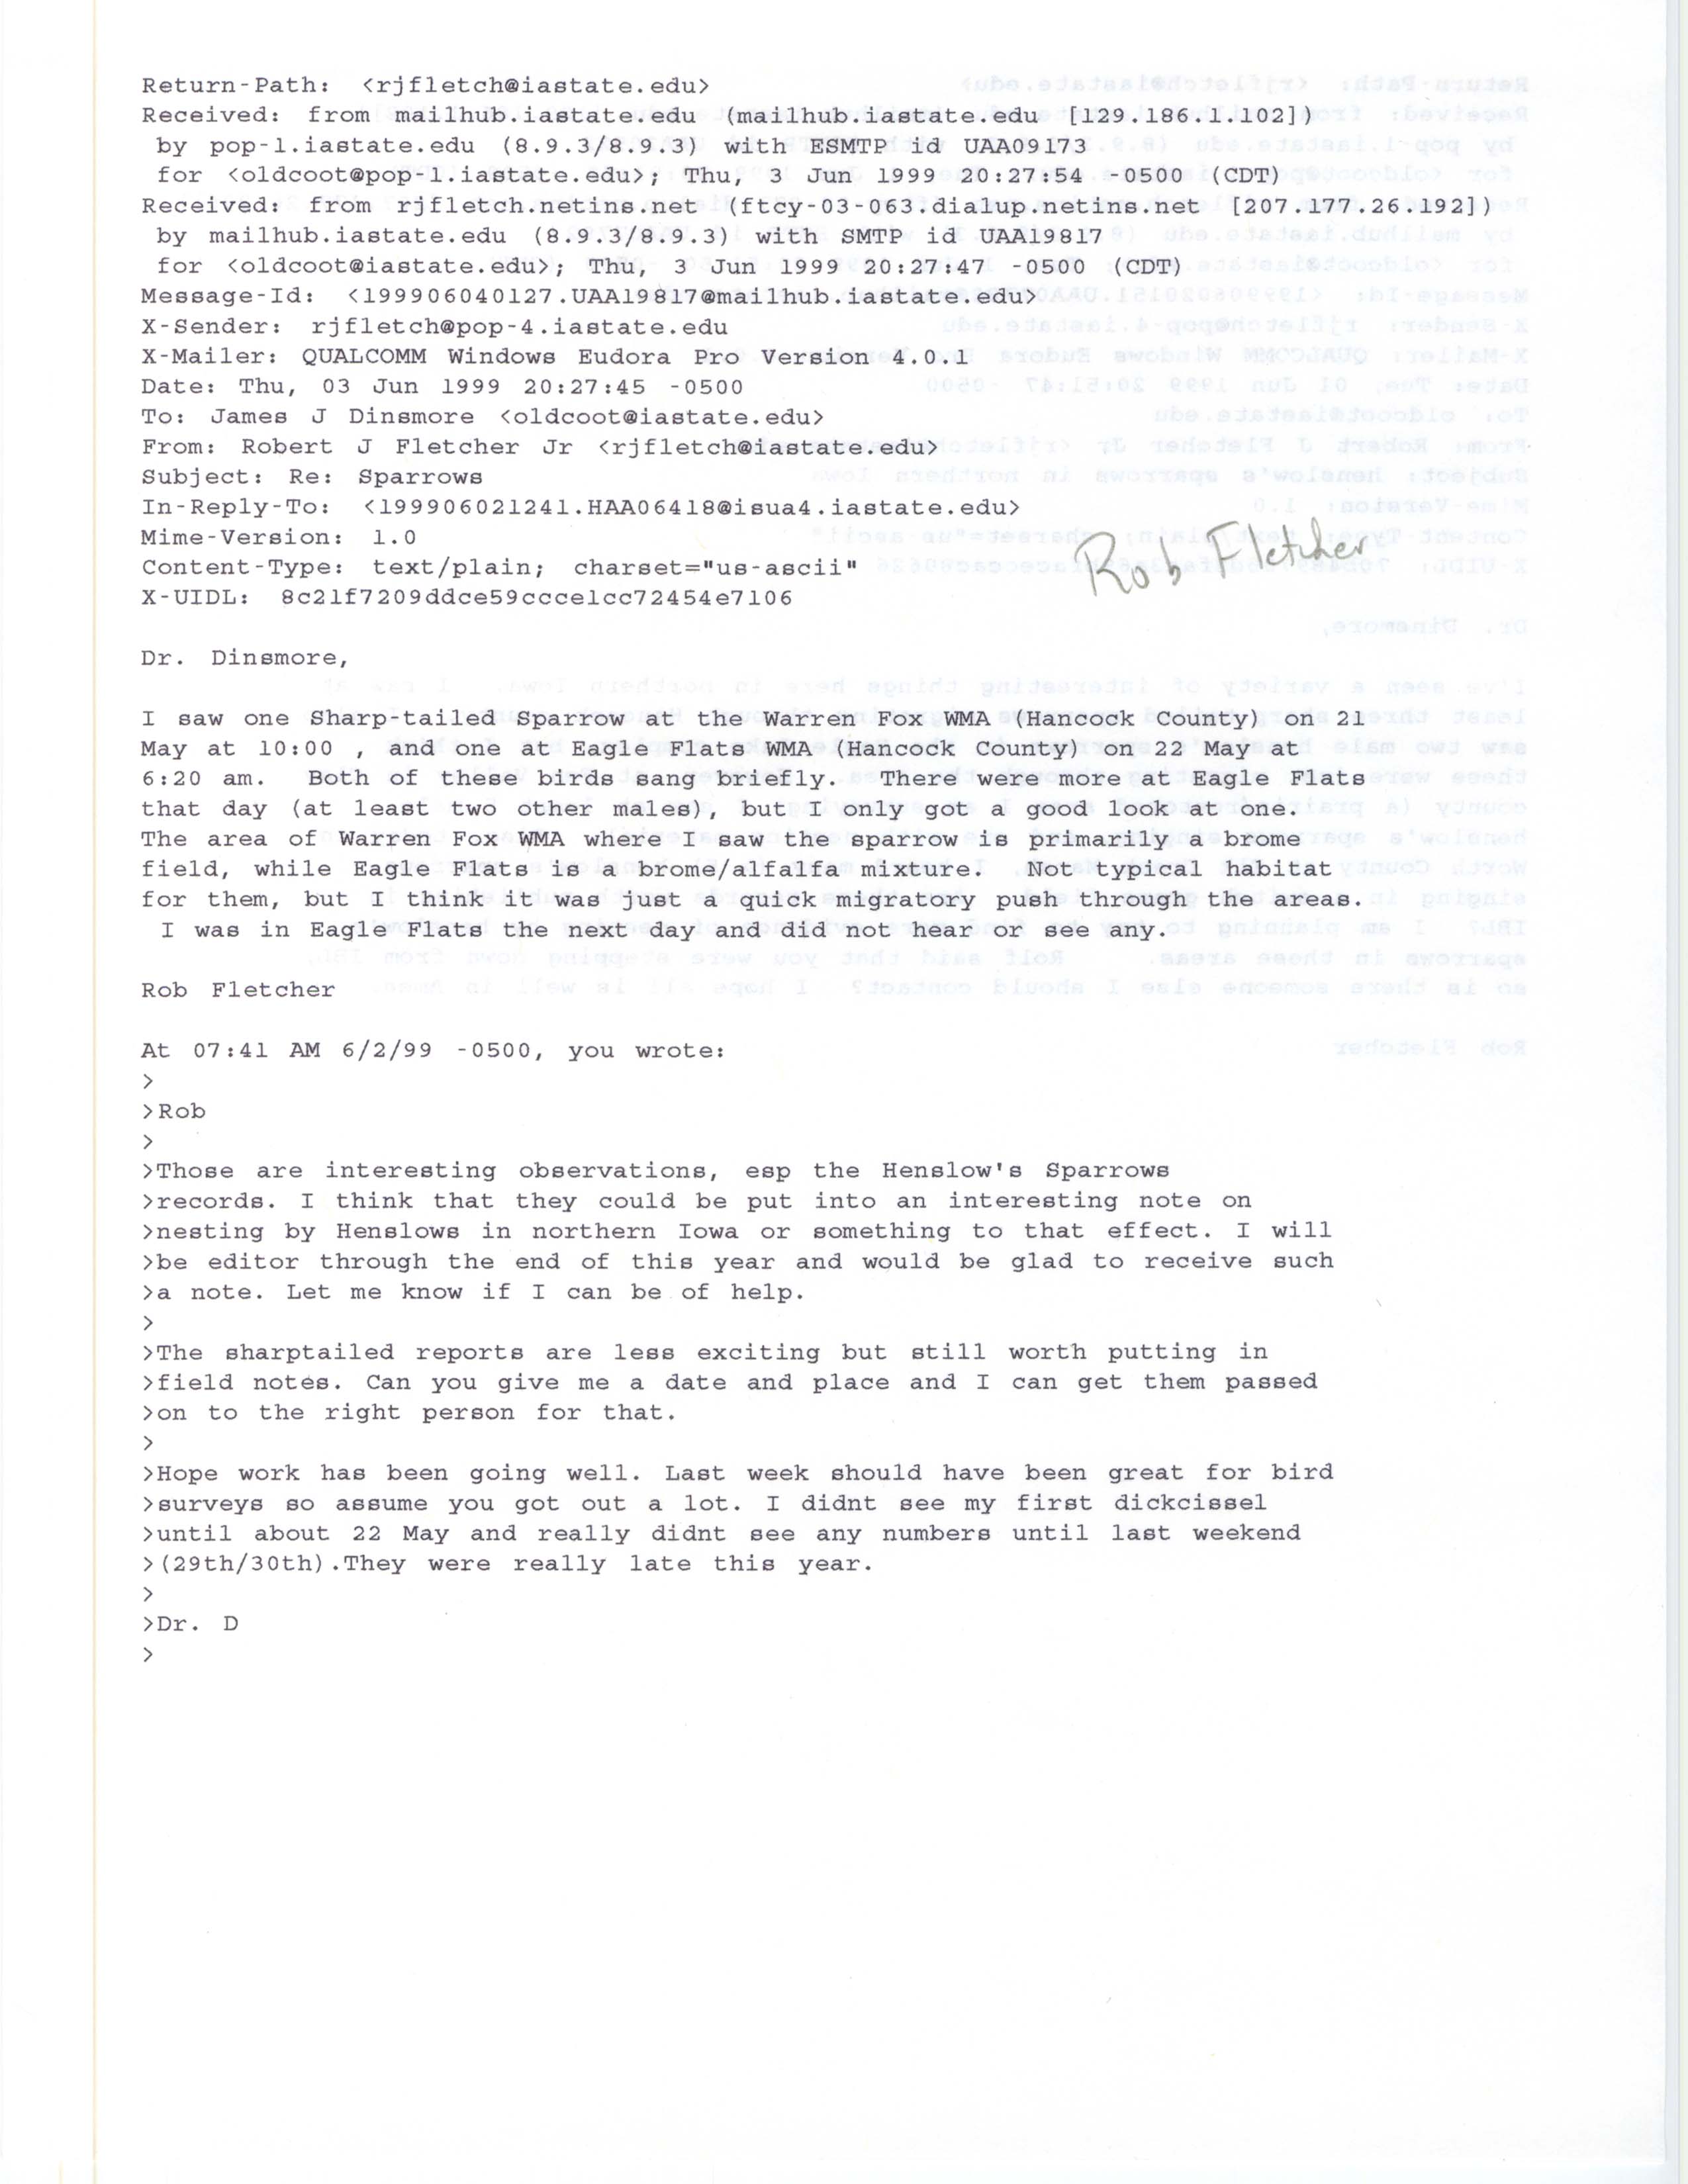 Rob Fletcher email to Jim Dinsmore regarding Sparrows, June 3, 1999